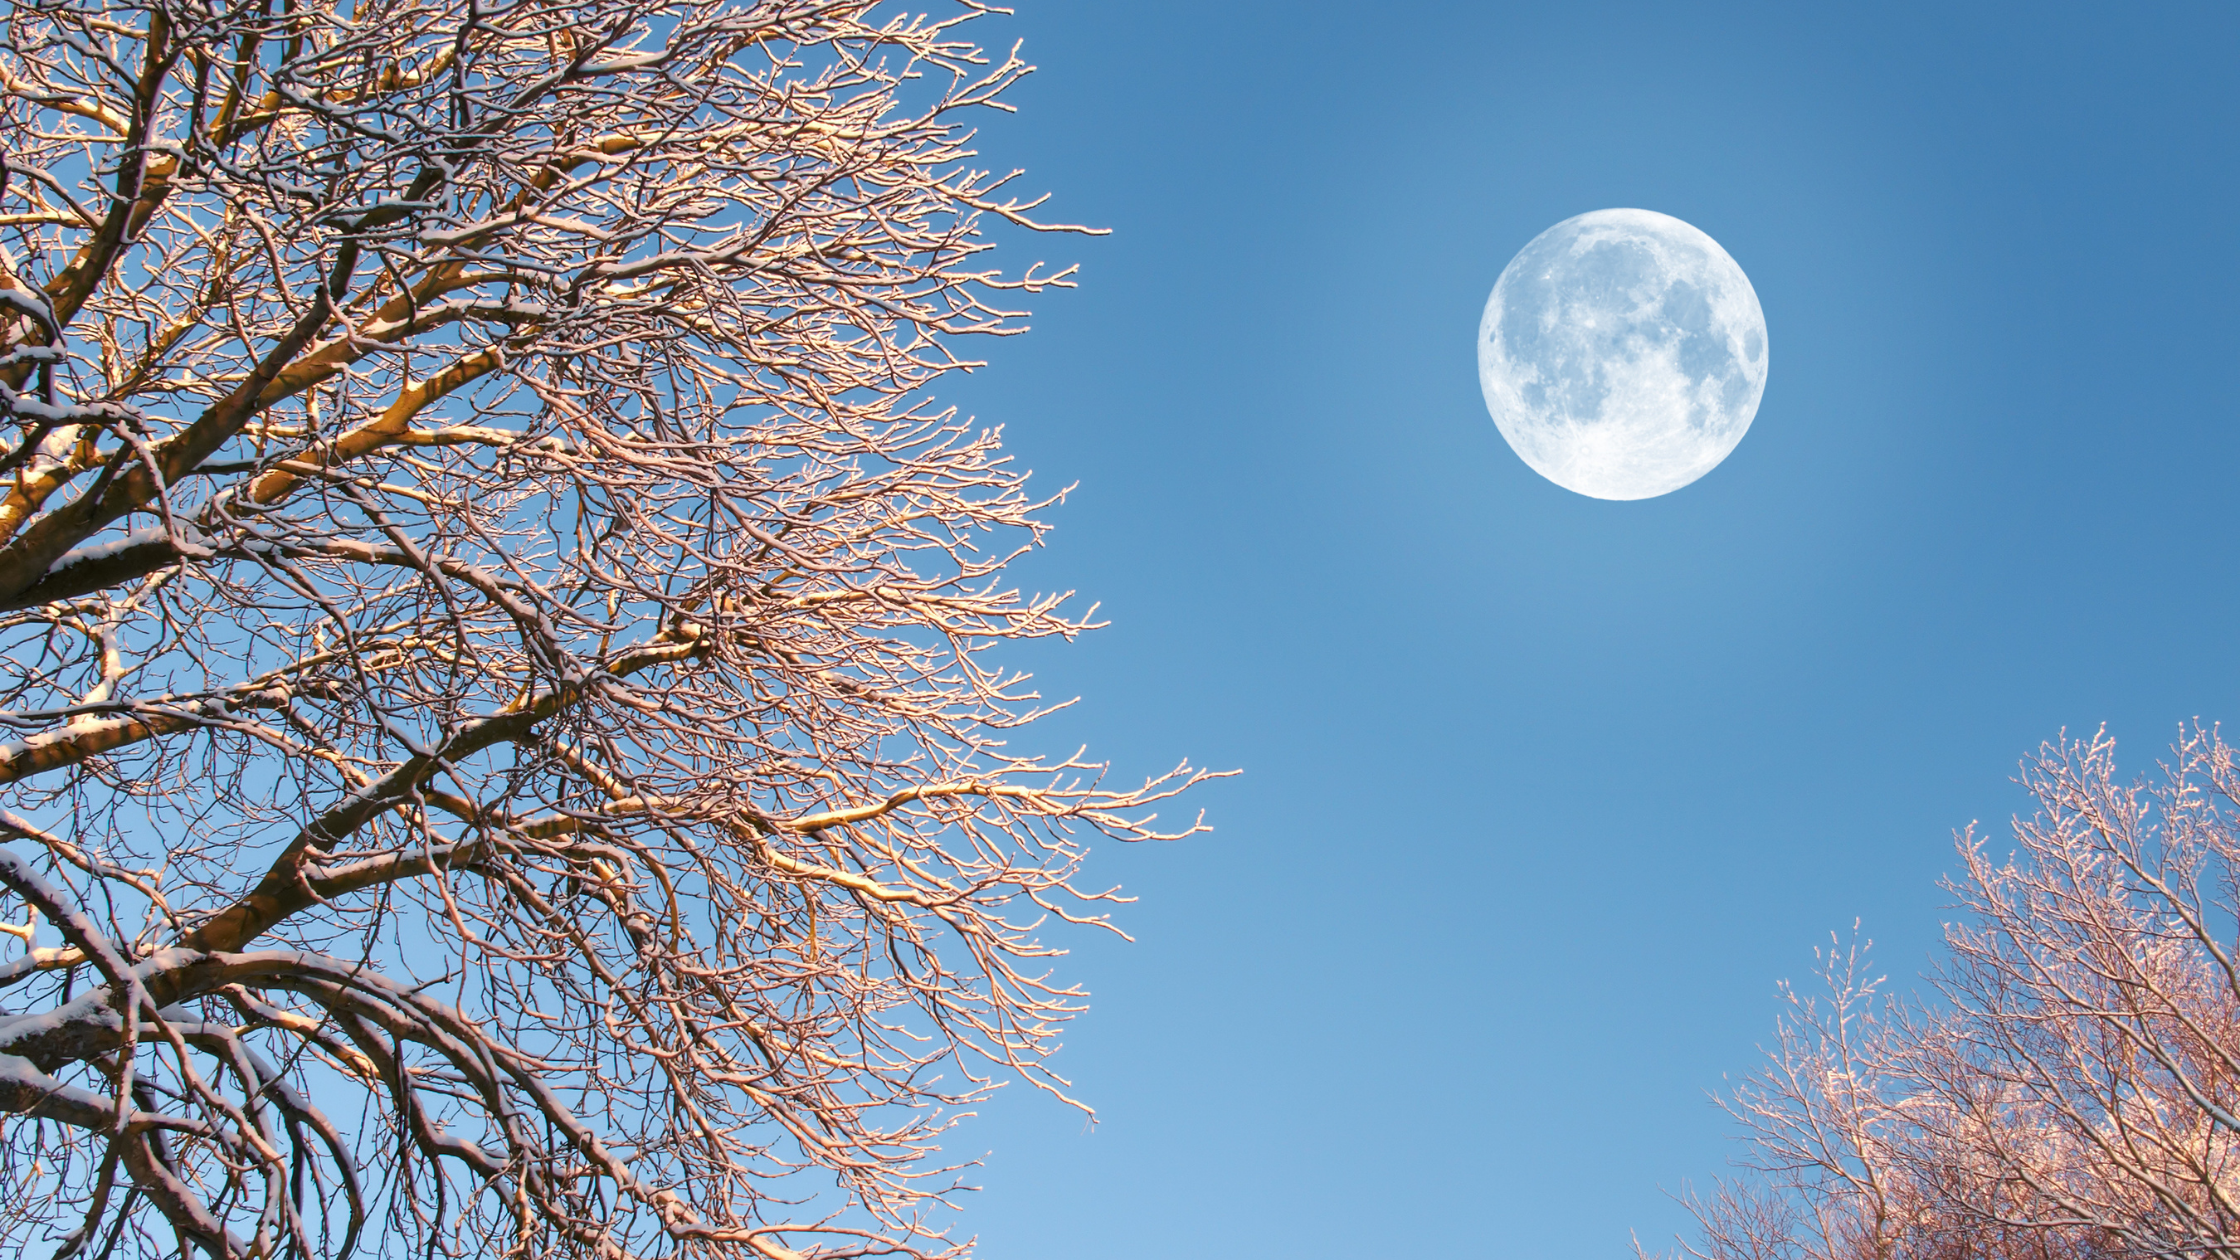 Winter Moon Nature Study Scavenger Hunt and Workbook